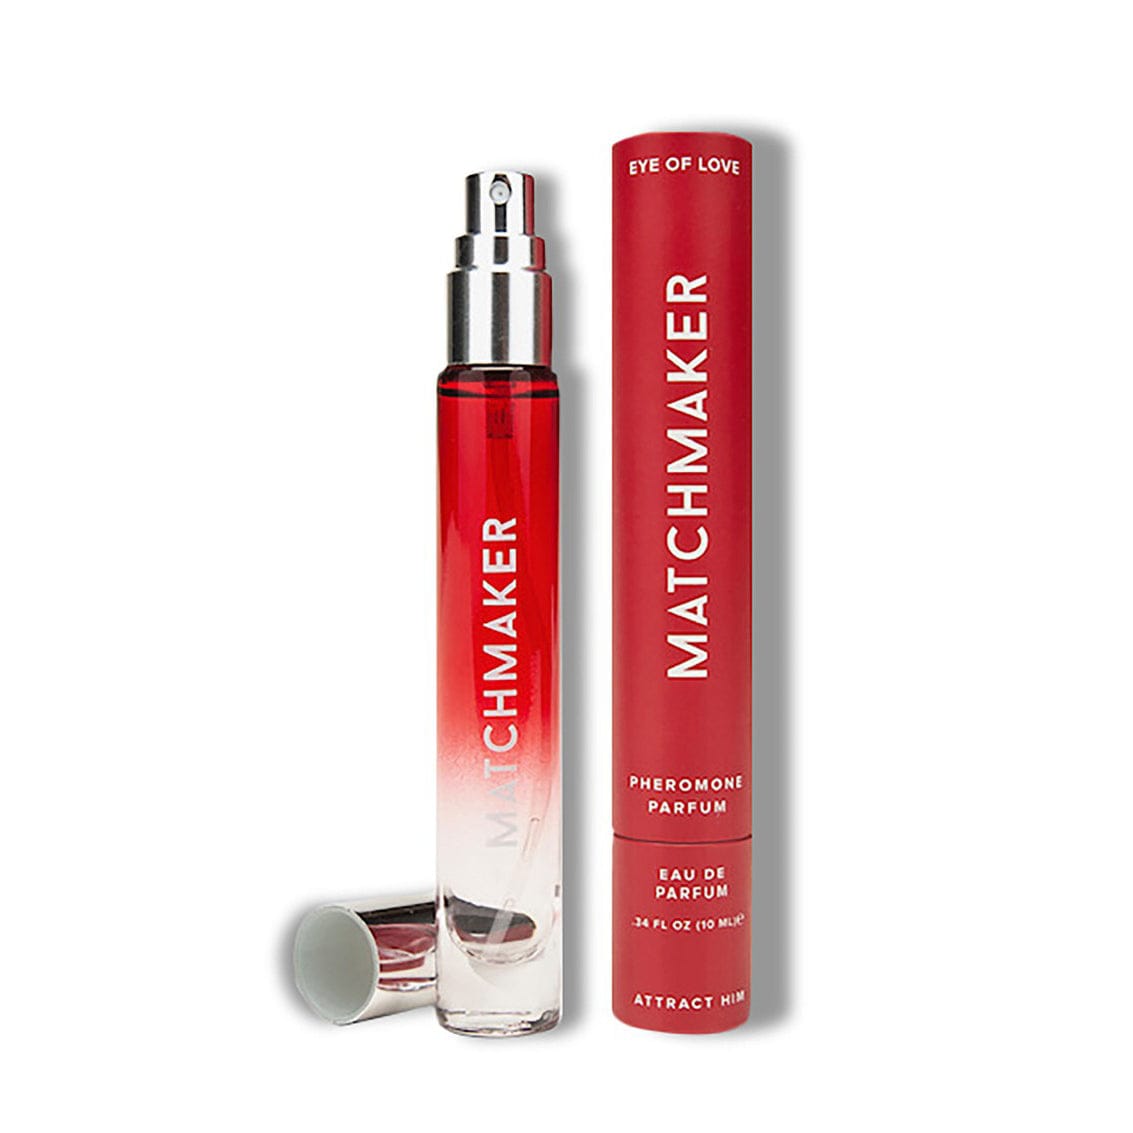 Eye of Love - Matchmaker Red Diamond Pheromone Parfum Spray Deluxe Travel Size  10ml 818141014165 Pheromones